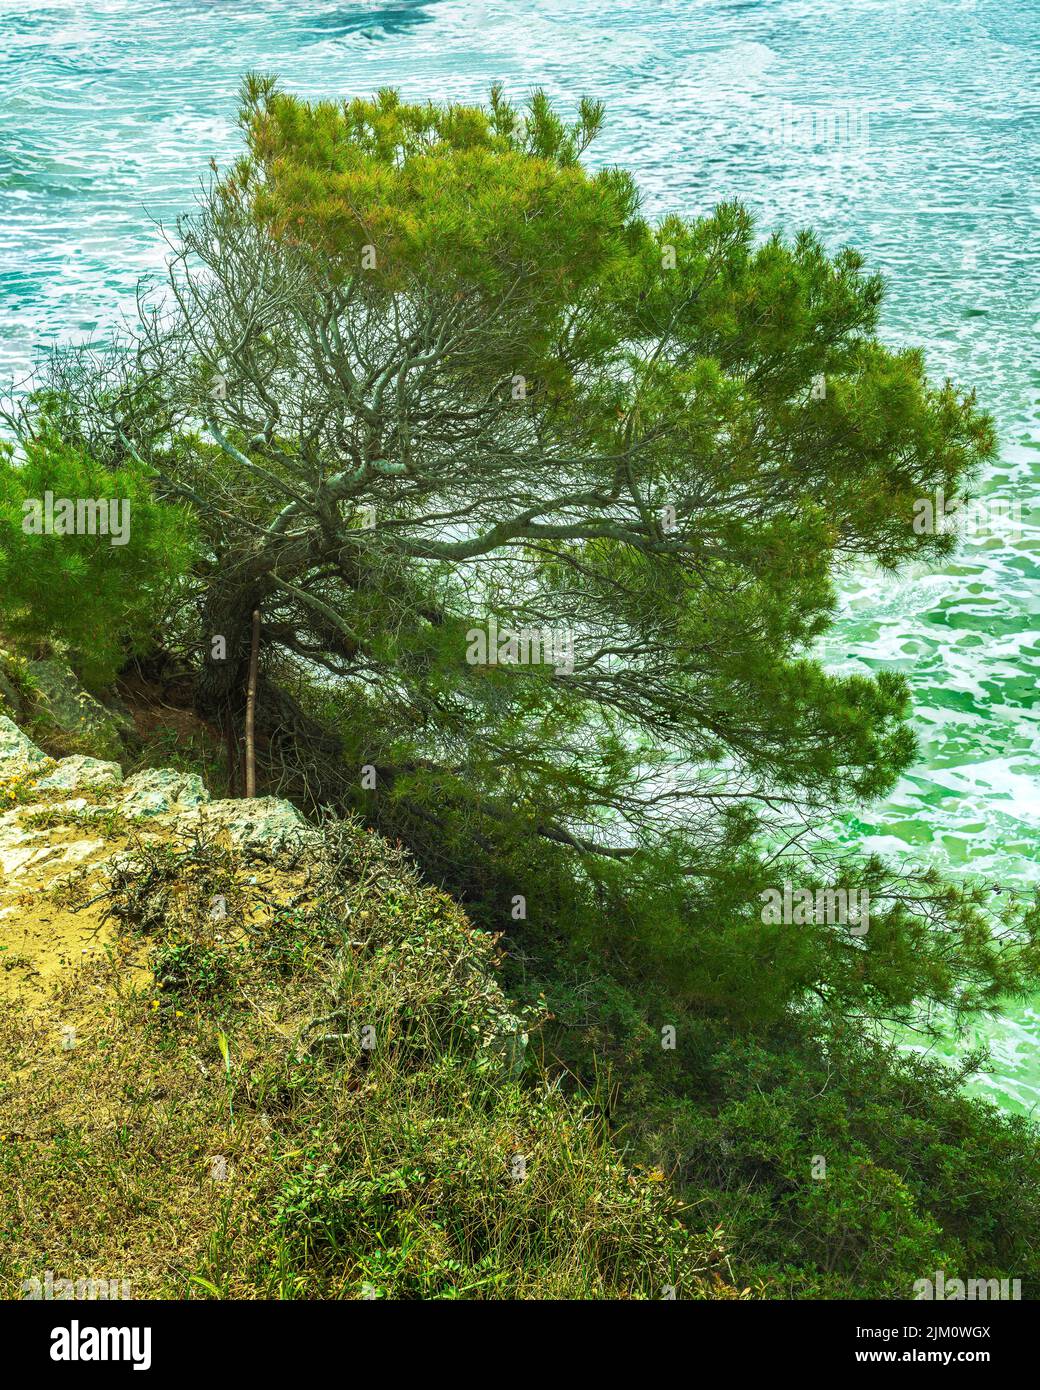 Aleppo pine from the Mediterranean scrub along the walls around the Bay of Sfinale in the Gargano National Park. Peschici, Foggia province, Apulia Stock Photo